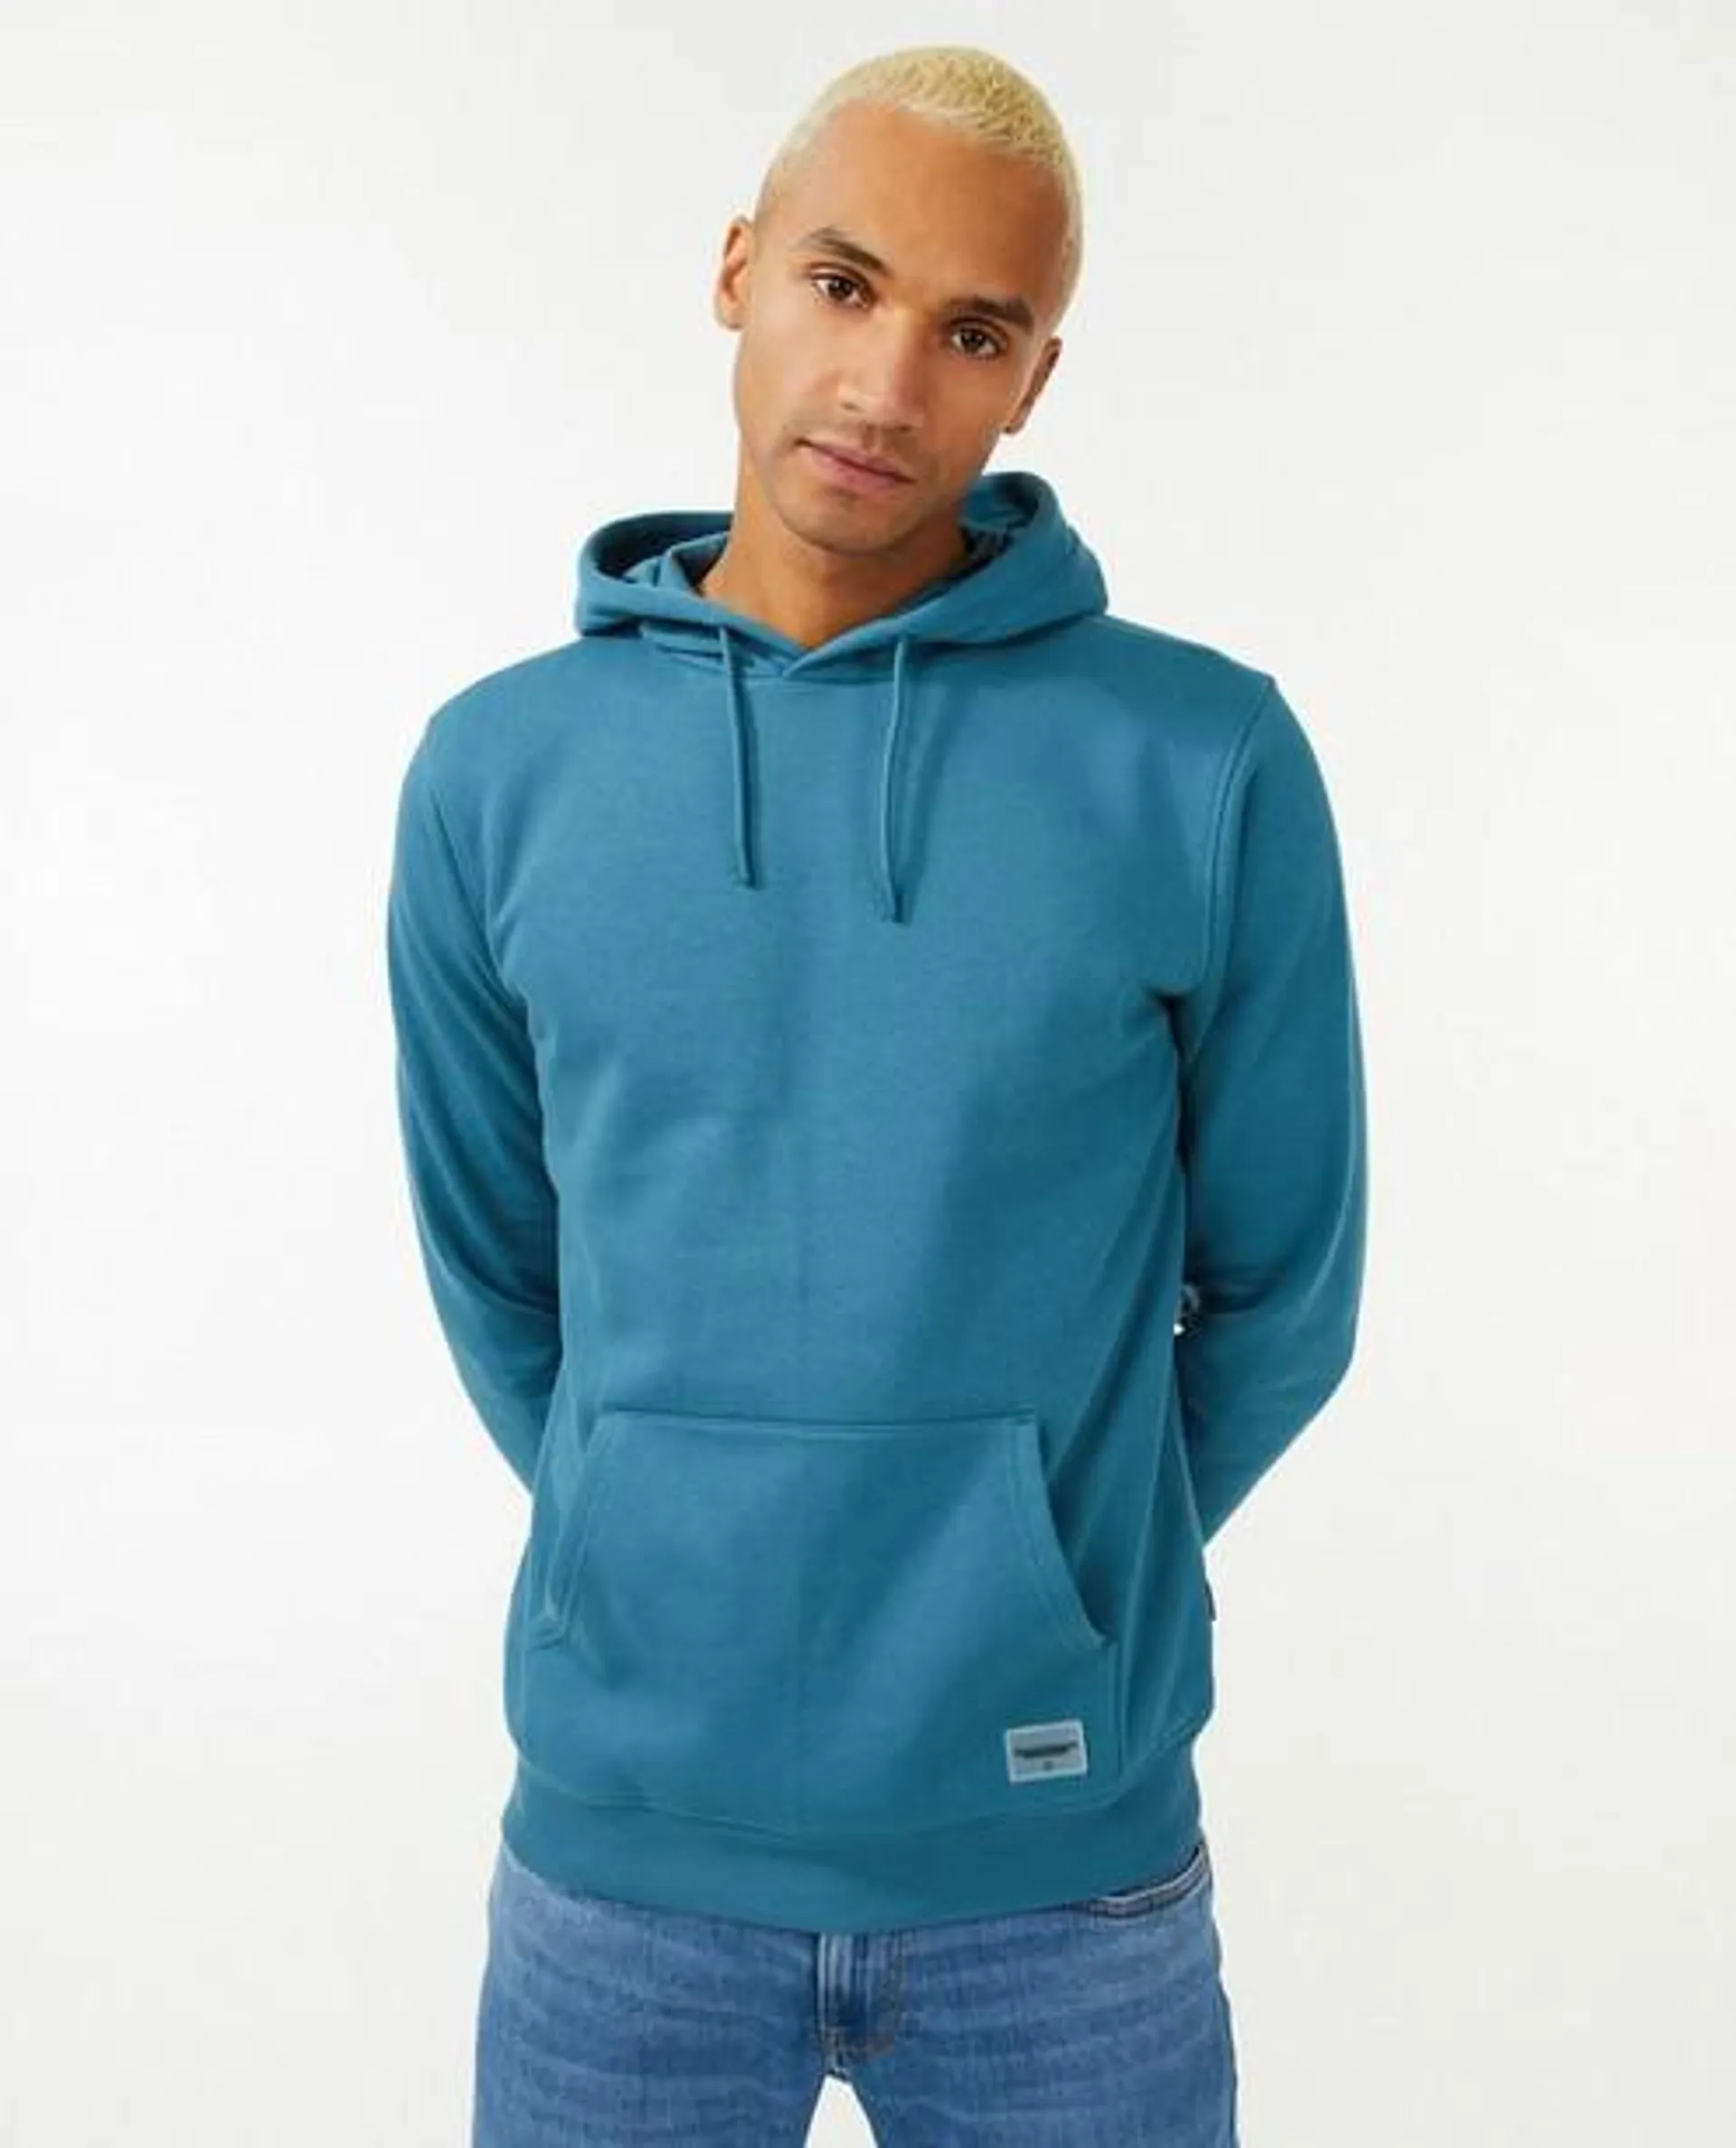 Turquoise hoodie